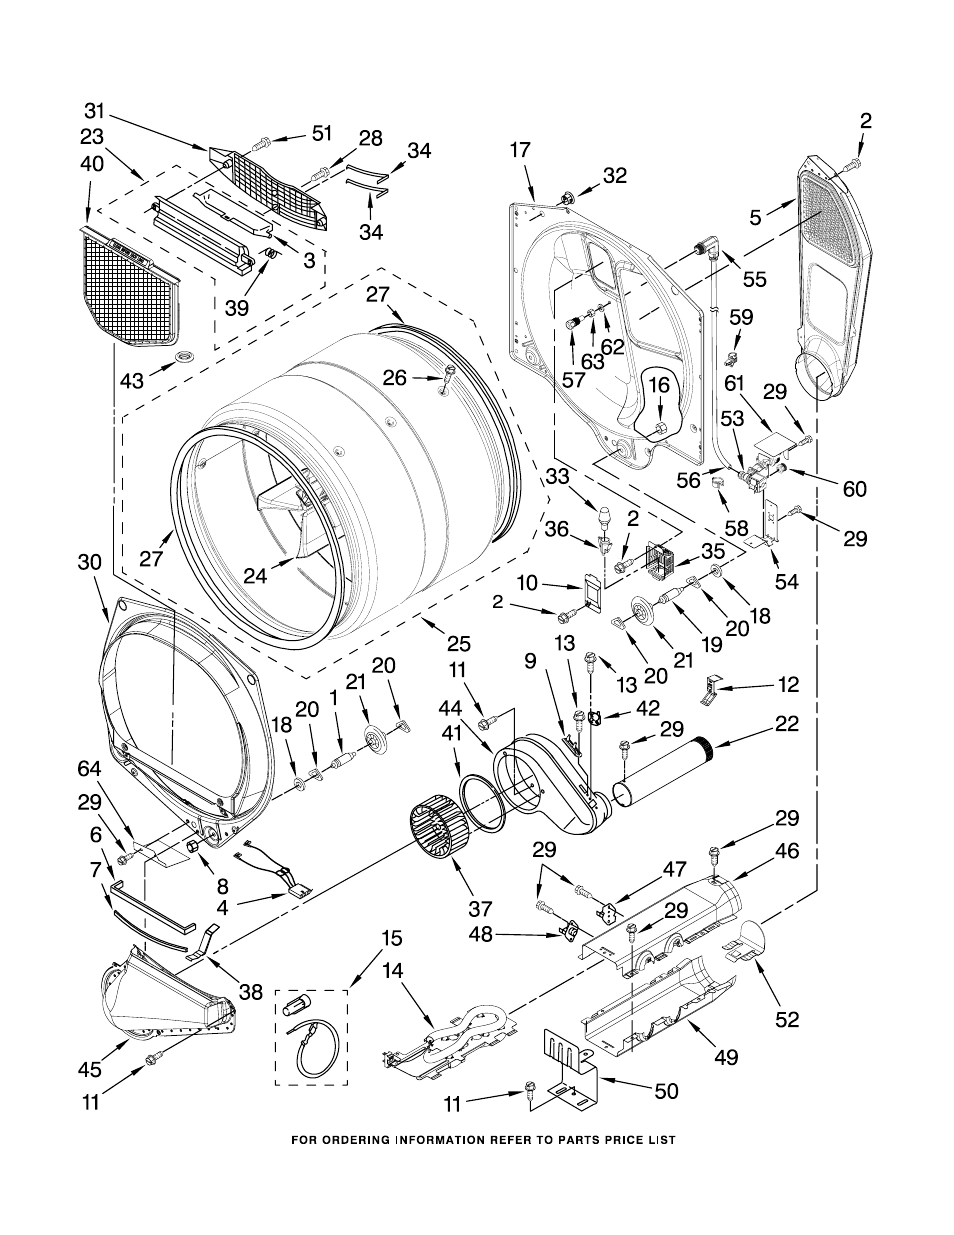 Bulkhead, Bulkhead parts | Maytag W10273484 User Manual | Page 5 / 8